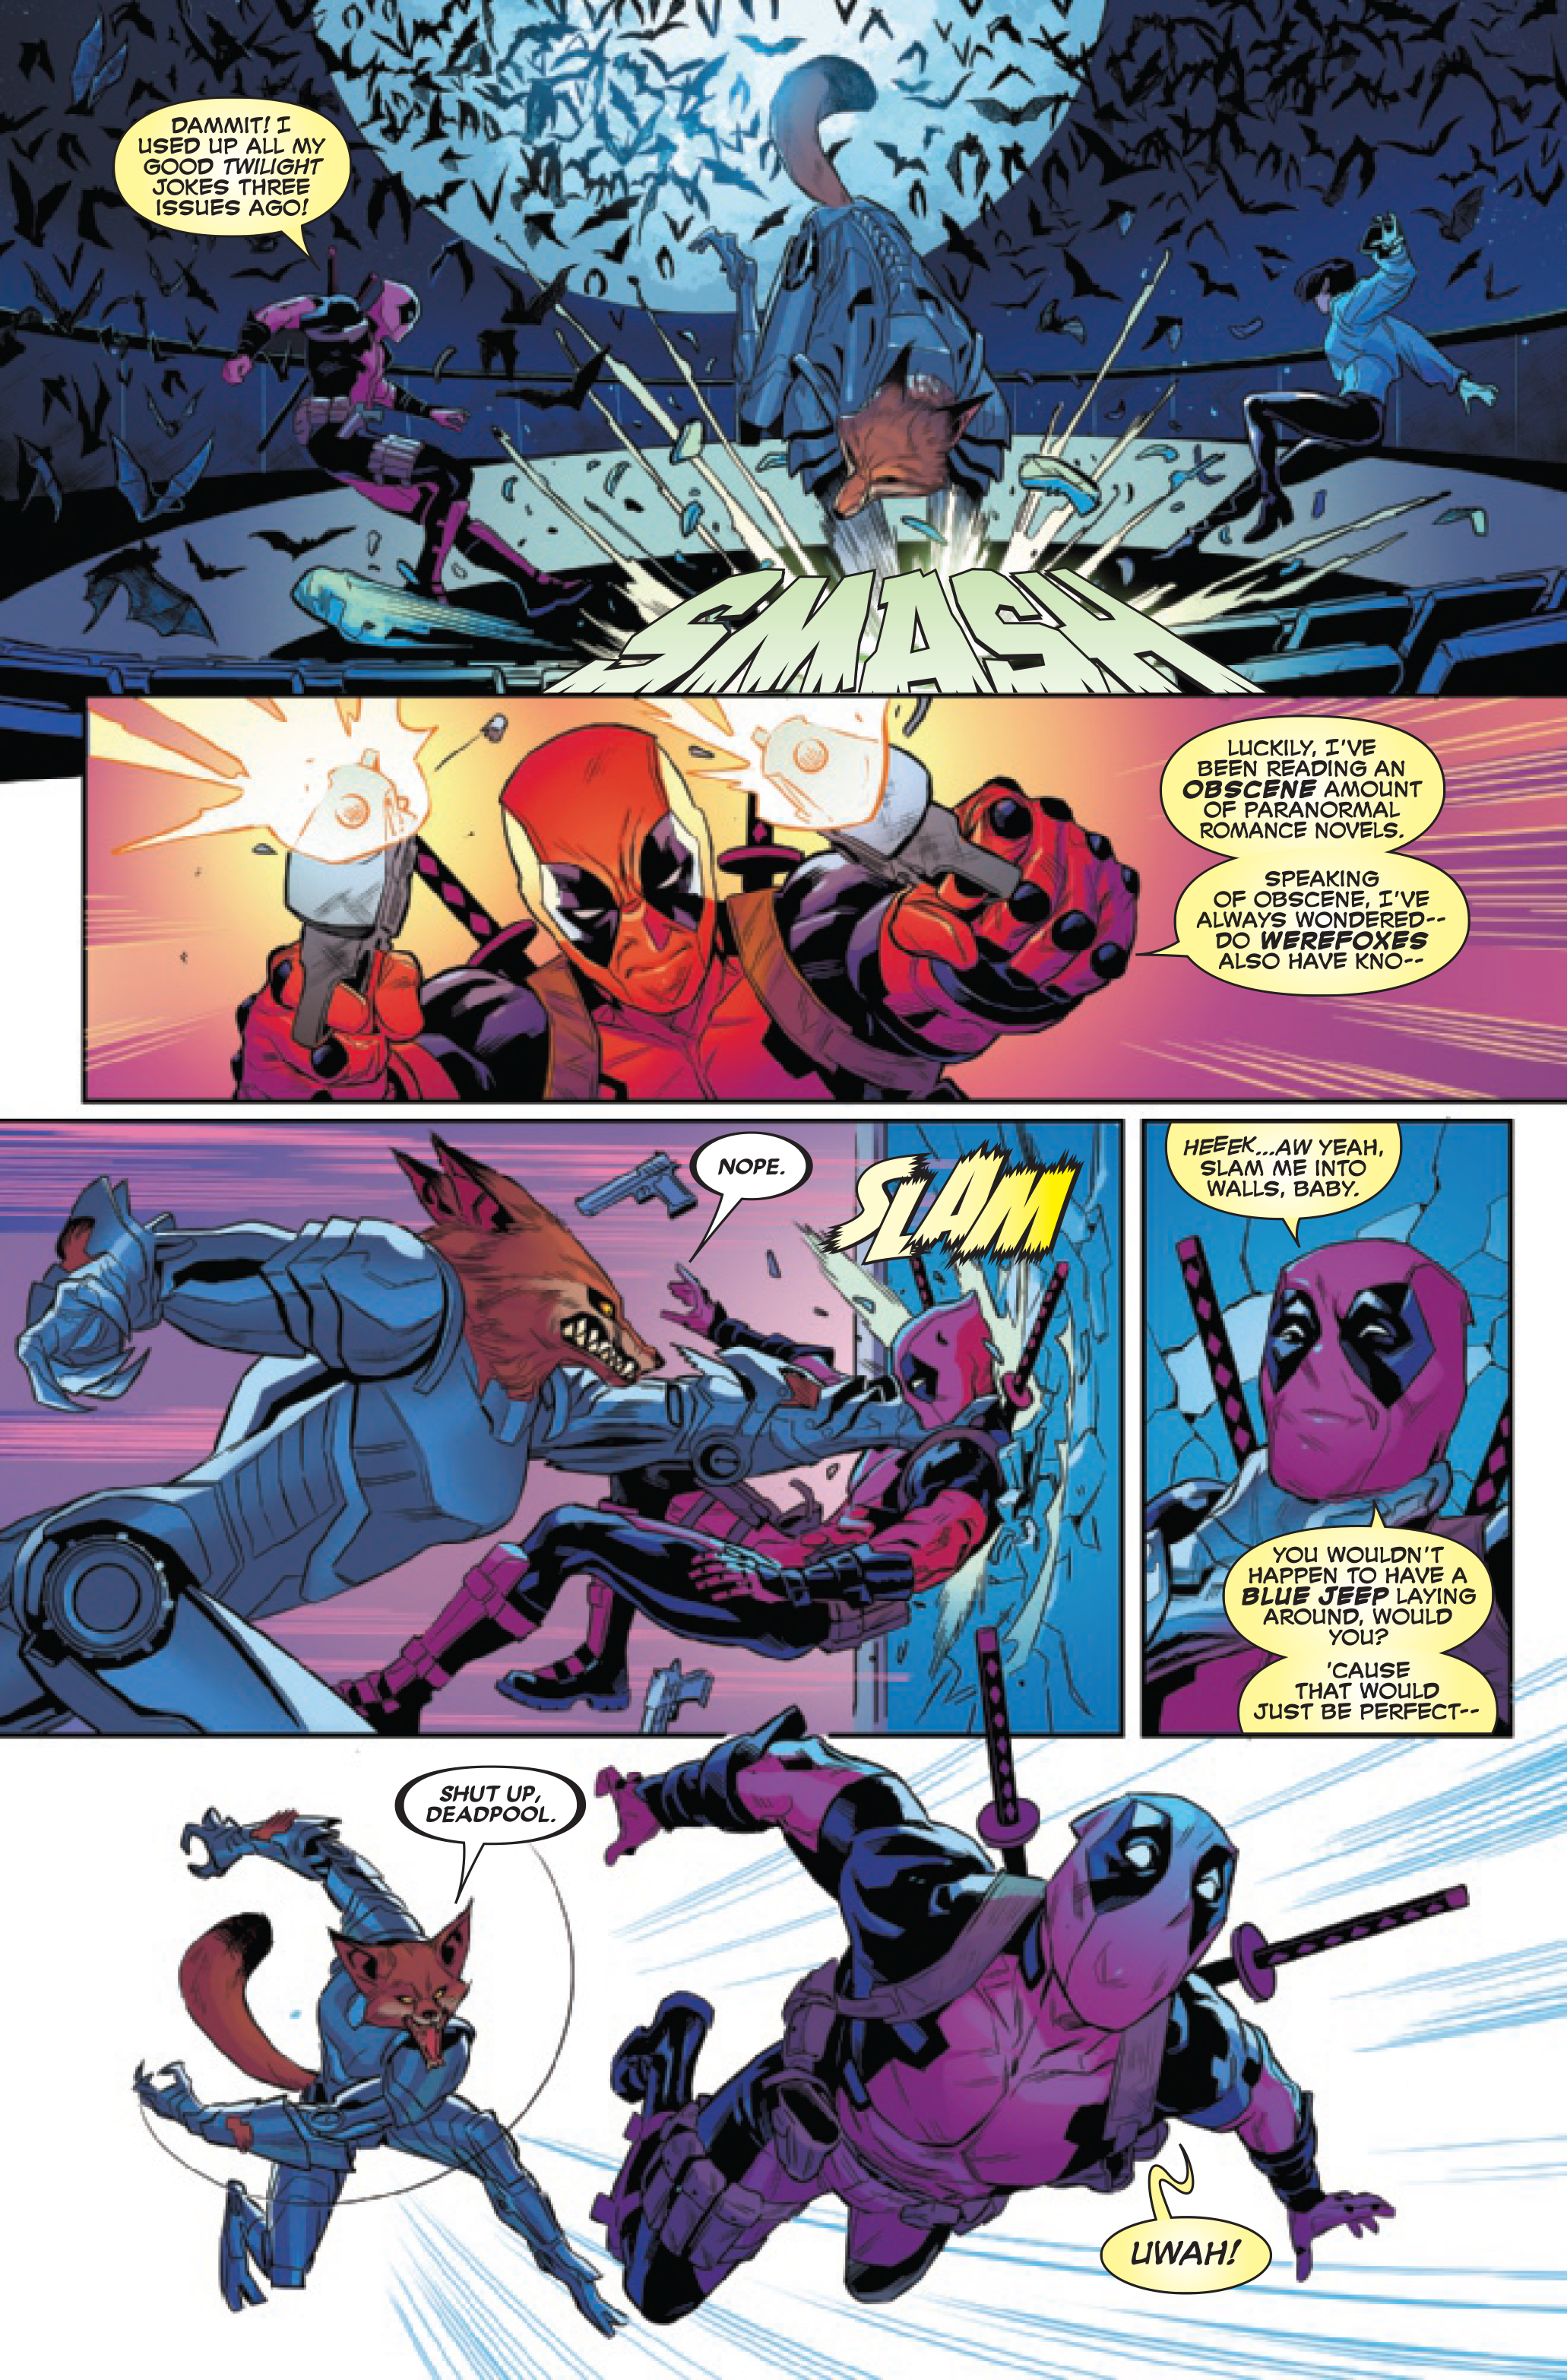 Deadpool (Fox) vs Usagi (Juni Taisen) - Battles - Comic Vine